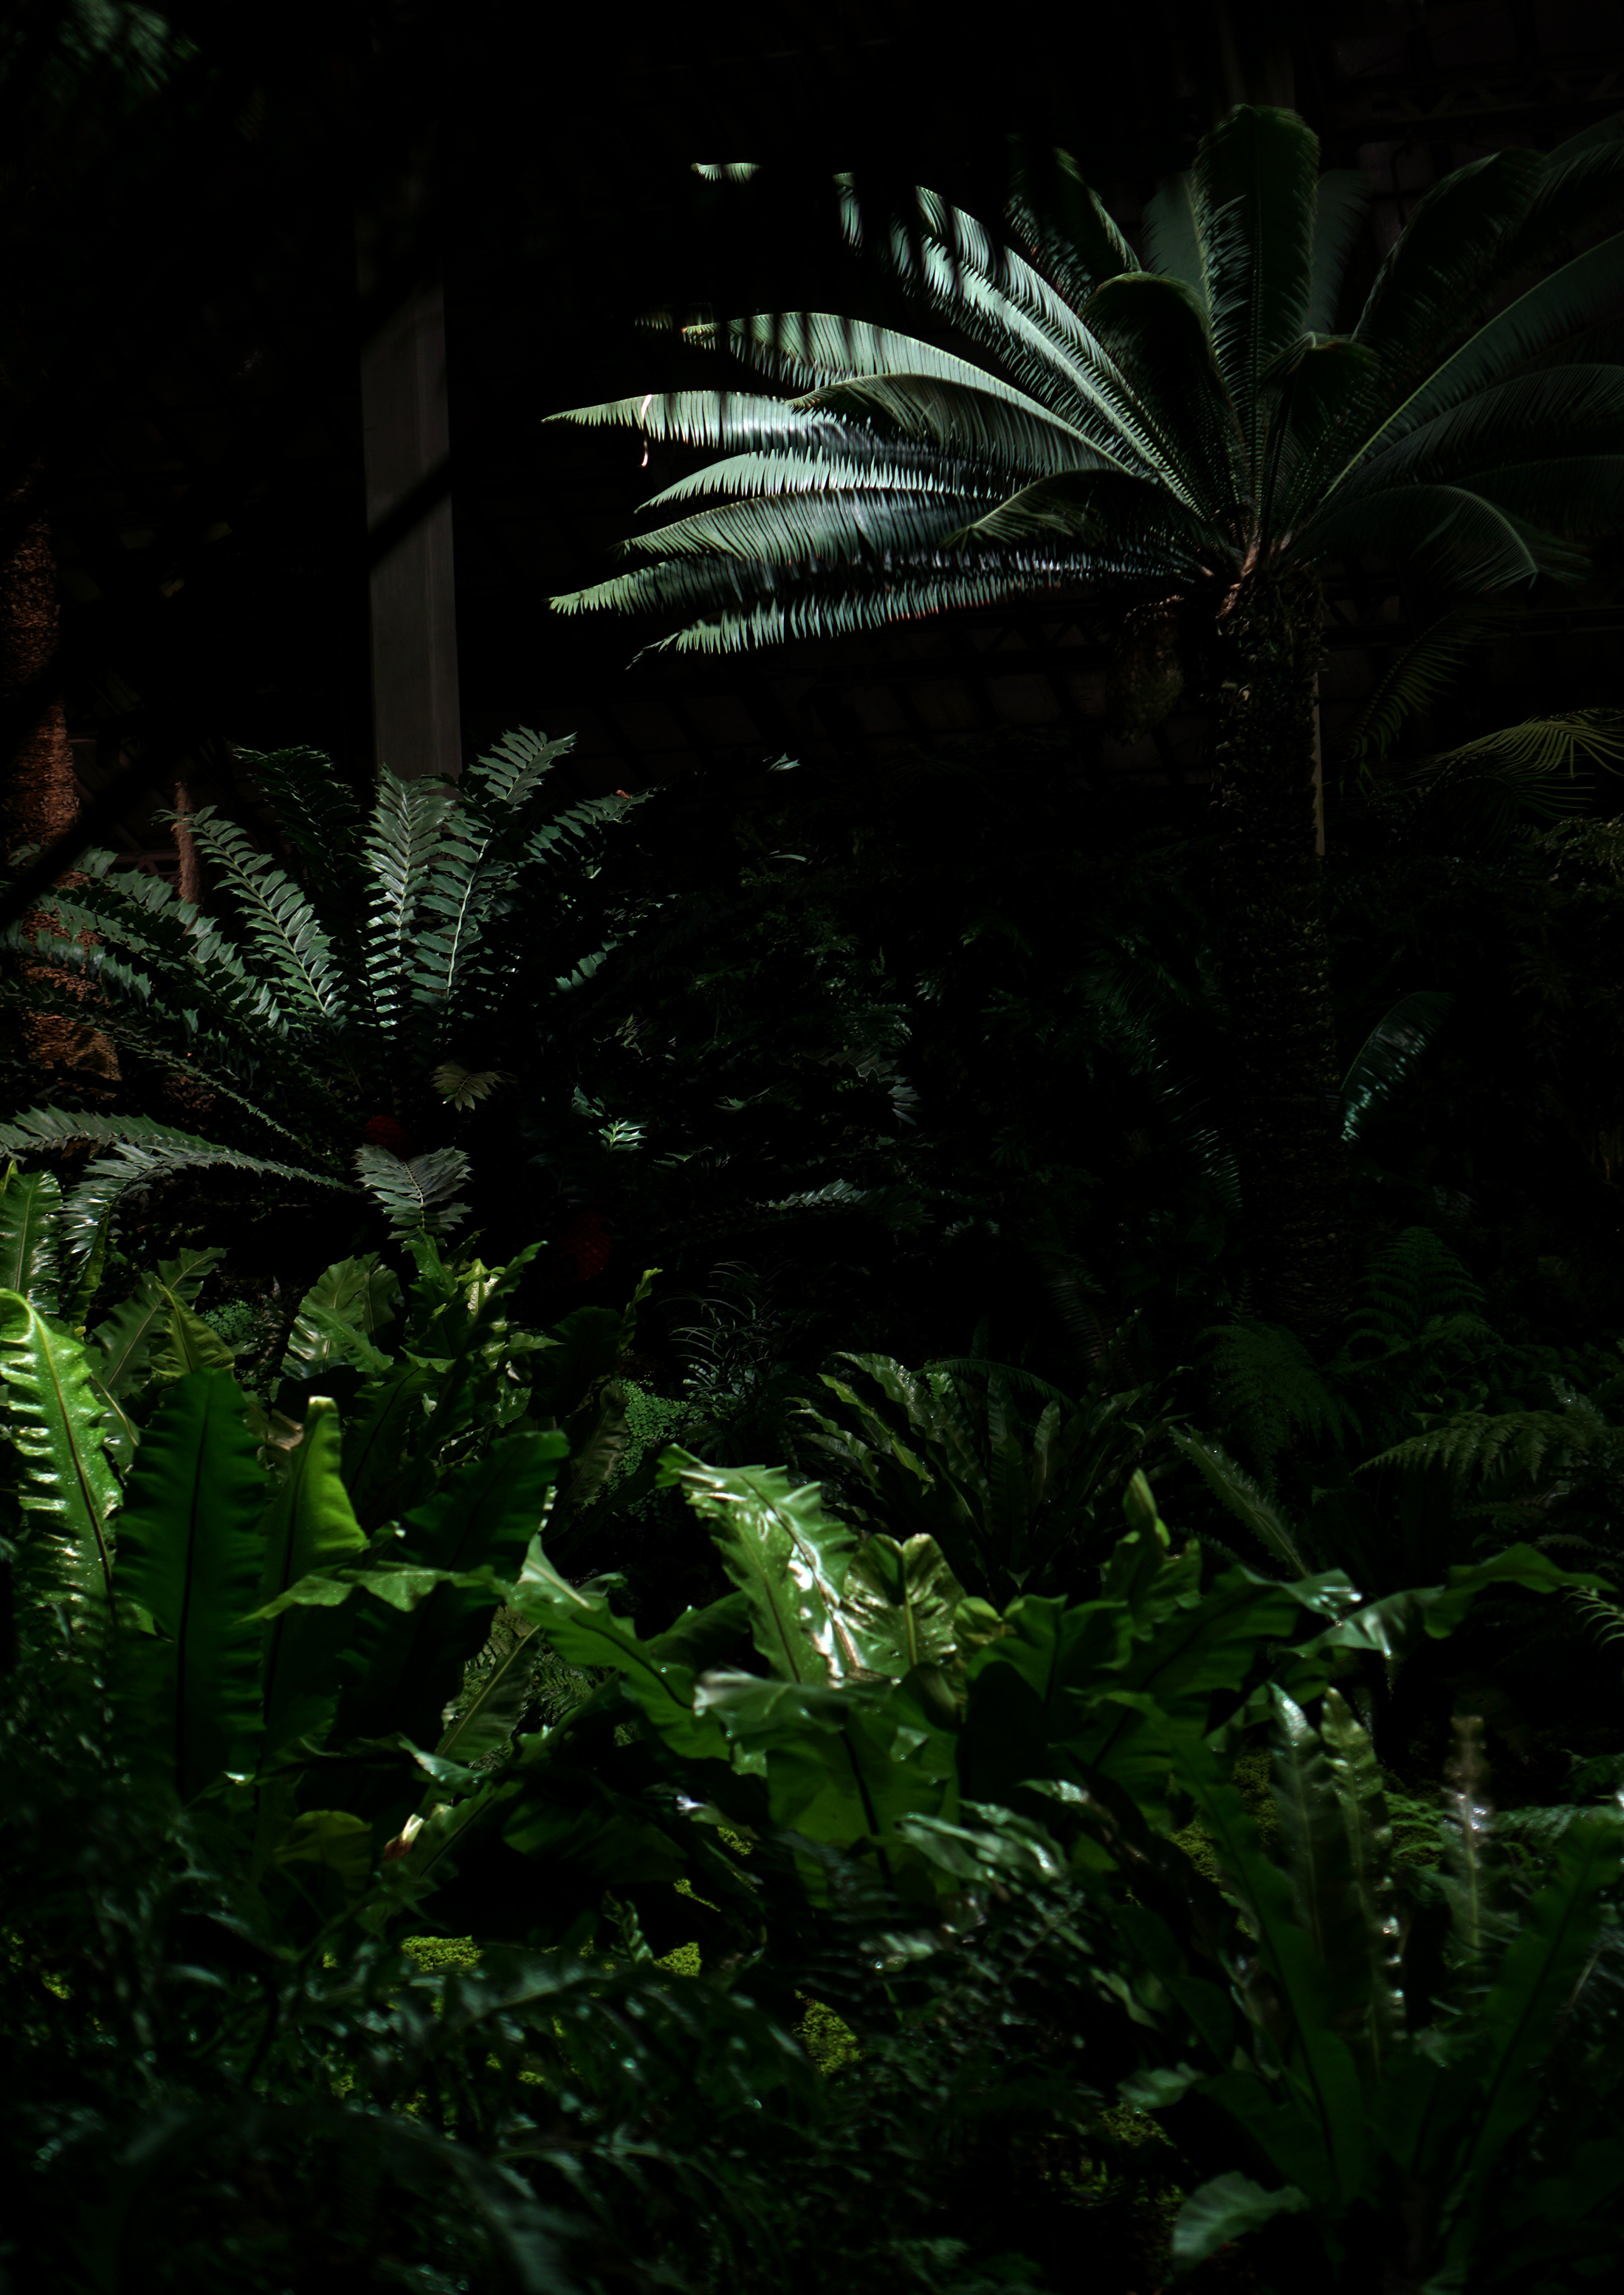 Uplit ferns in the Garfield Park Conservatory at night, Chicago / Darker than Green